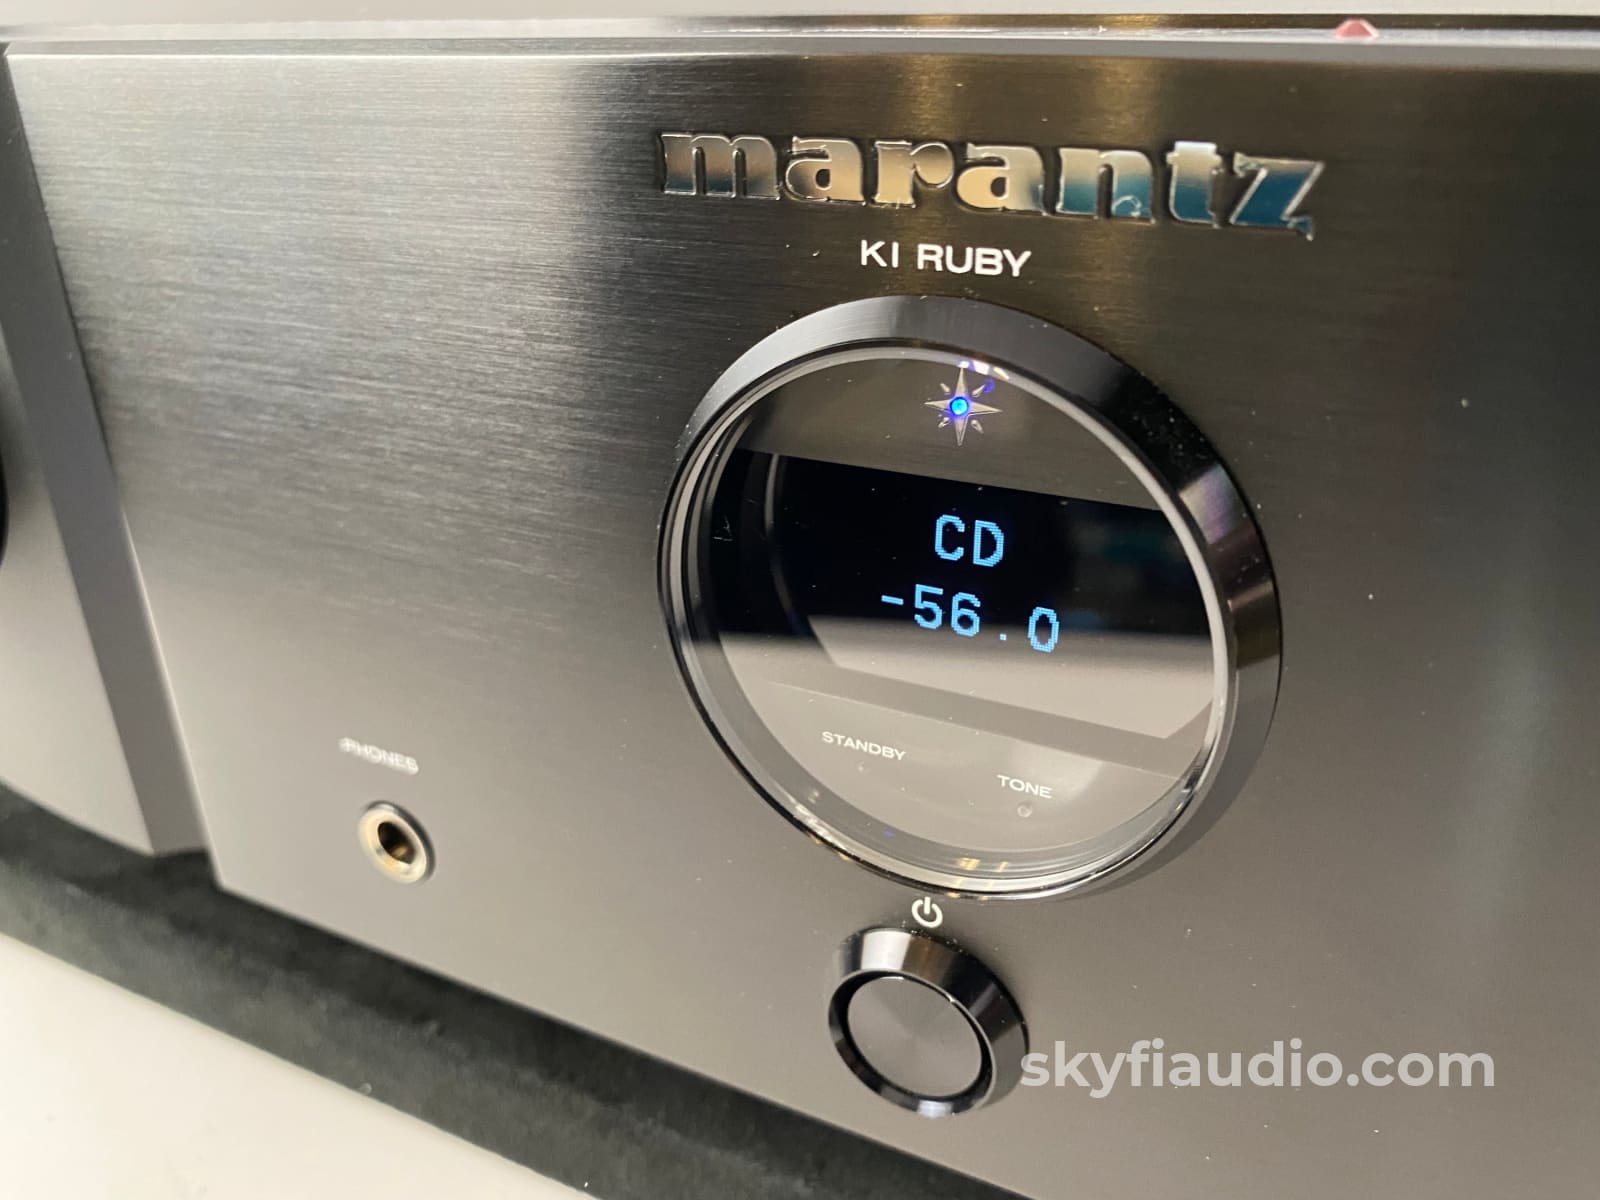 Marantz Pm-Ki Ruby Integrated Amplifier - Ken Ishiwata Signature Reference Limited Edition